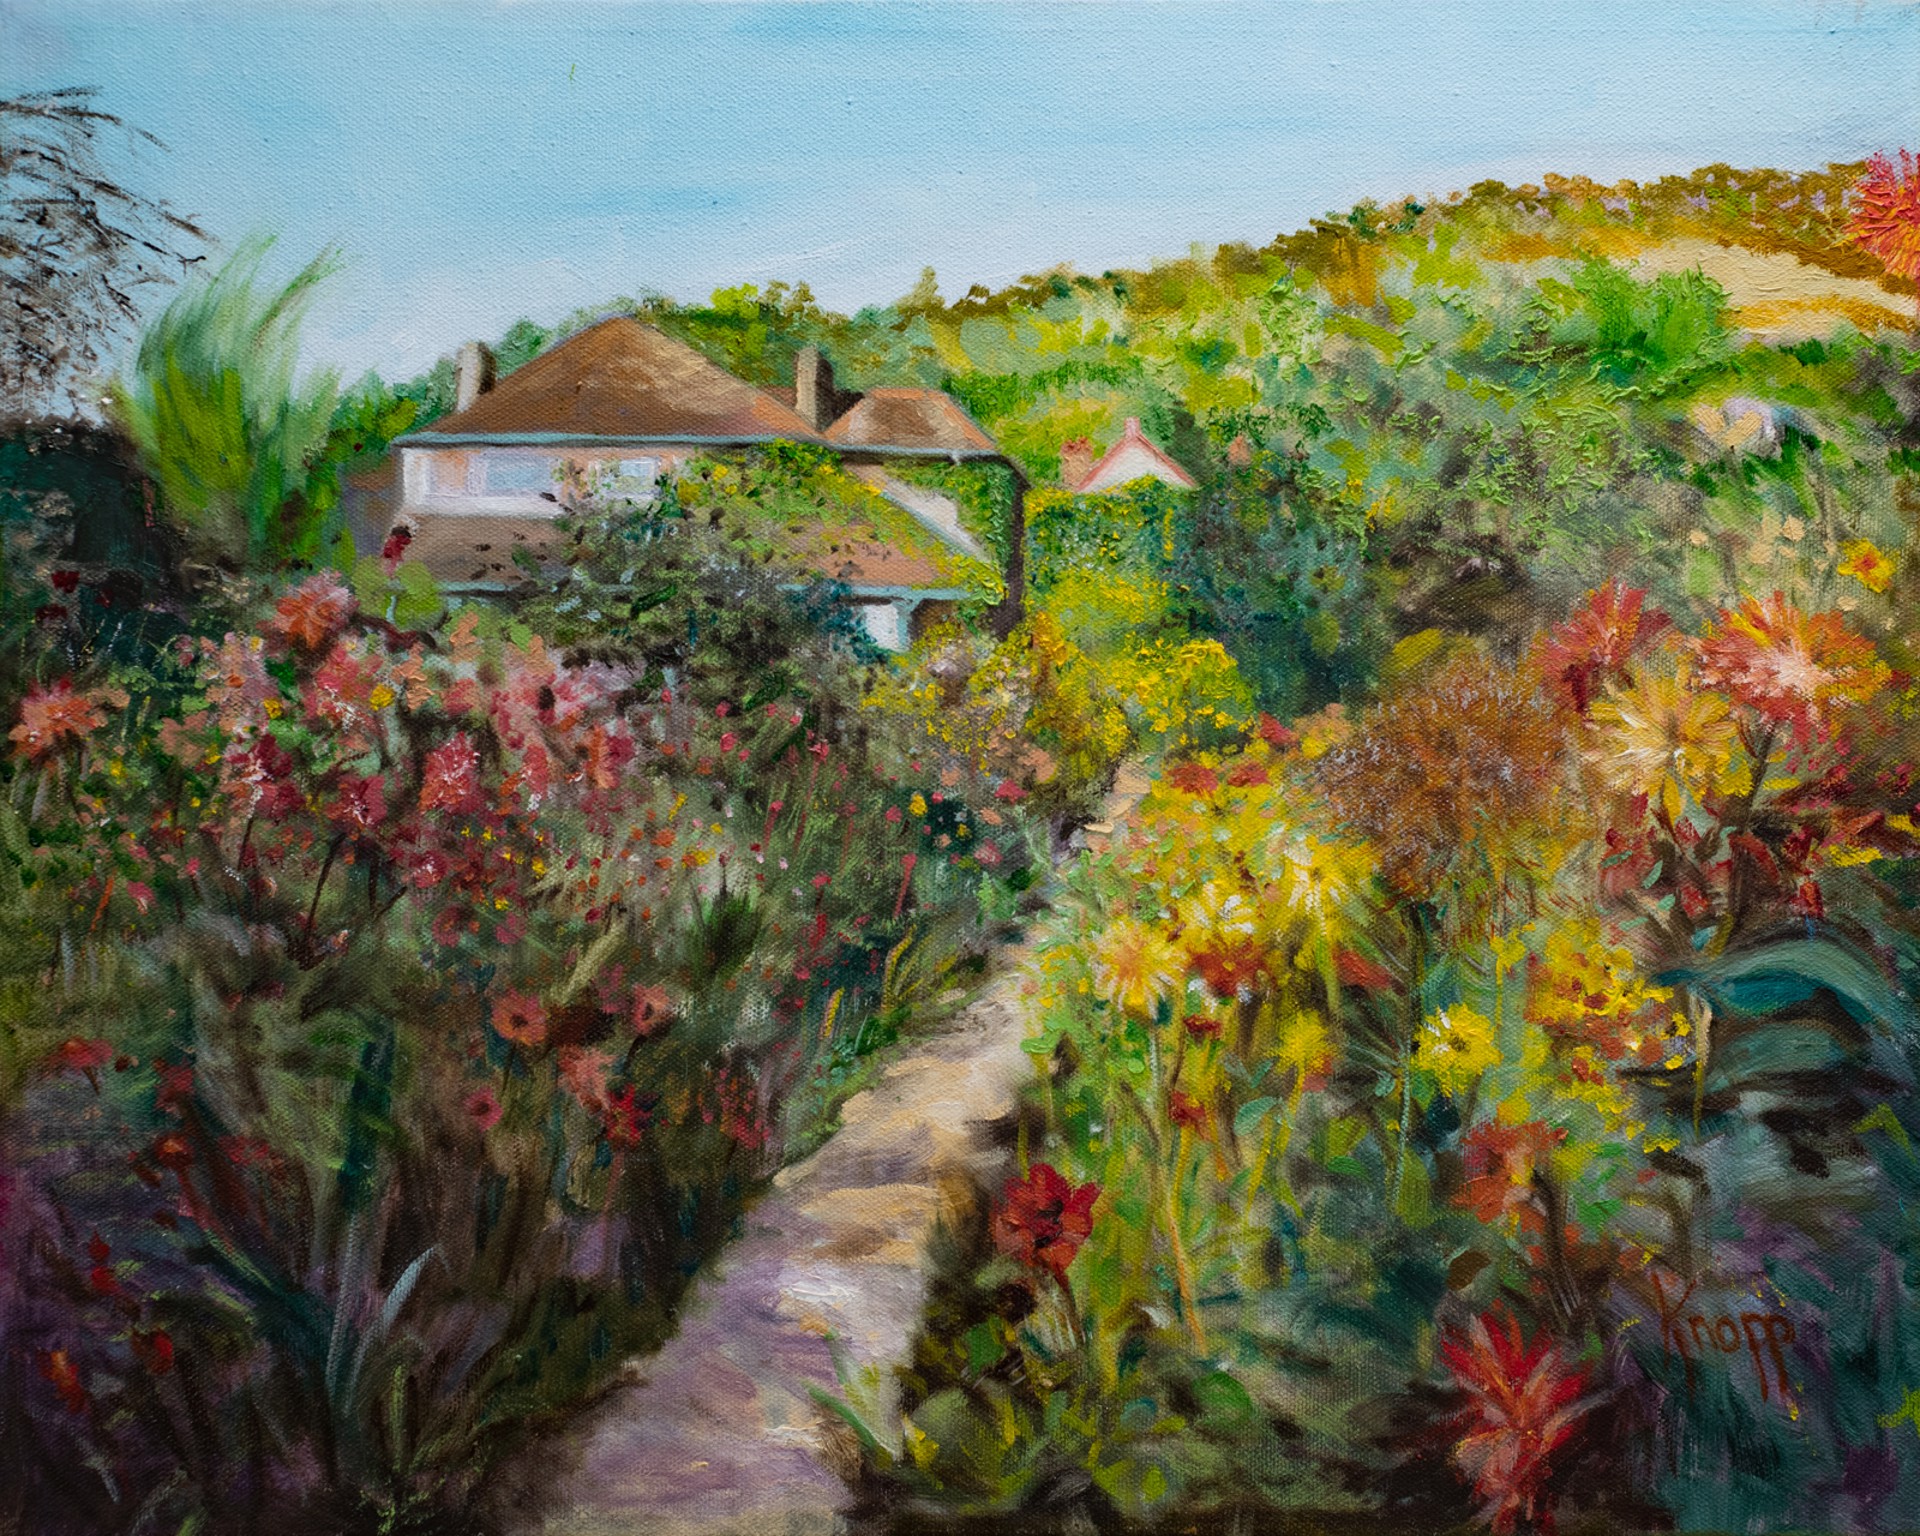 Monet's Gardens by Kathy Knopp